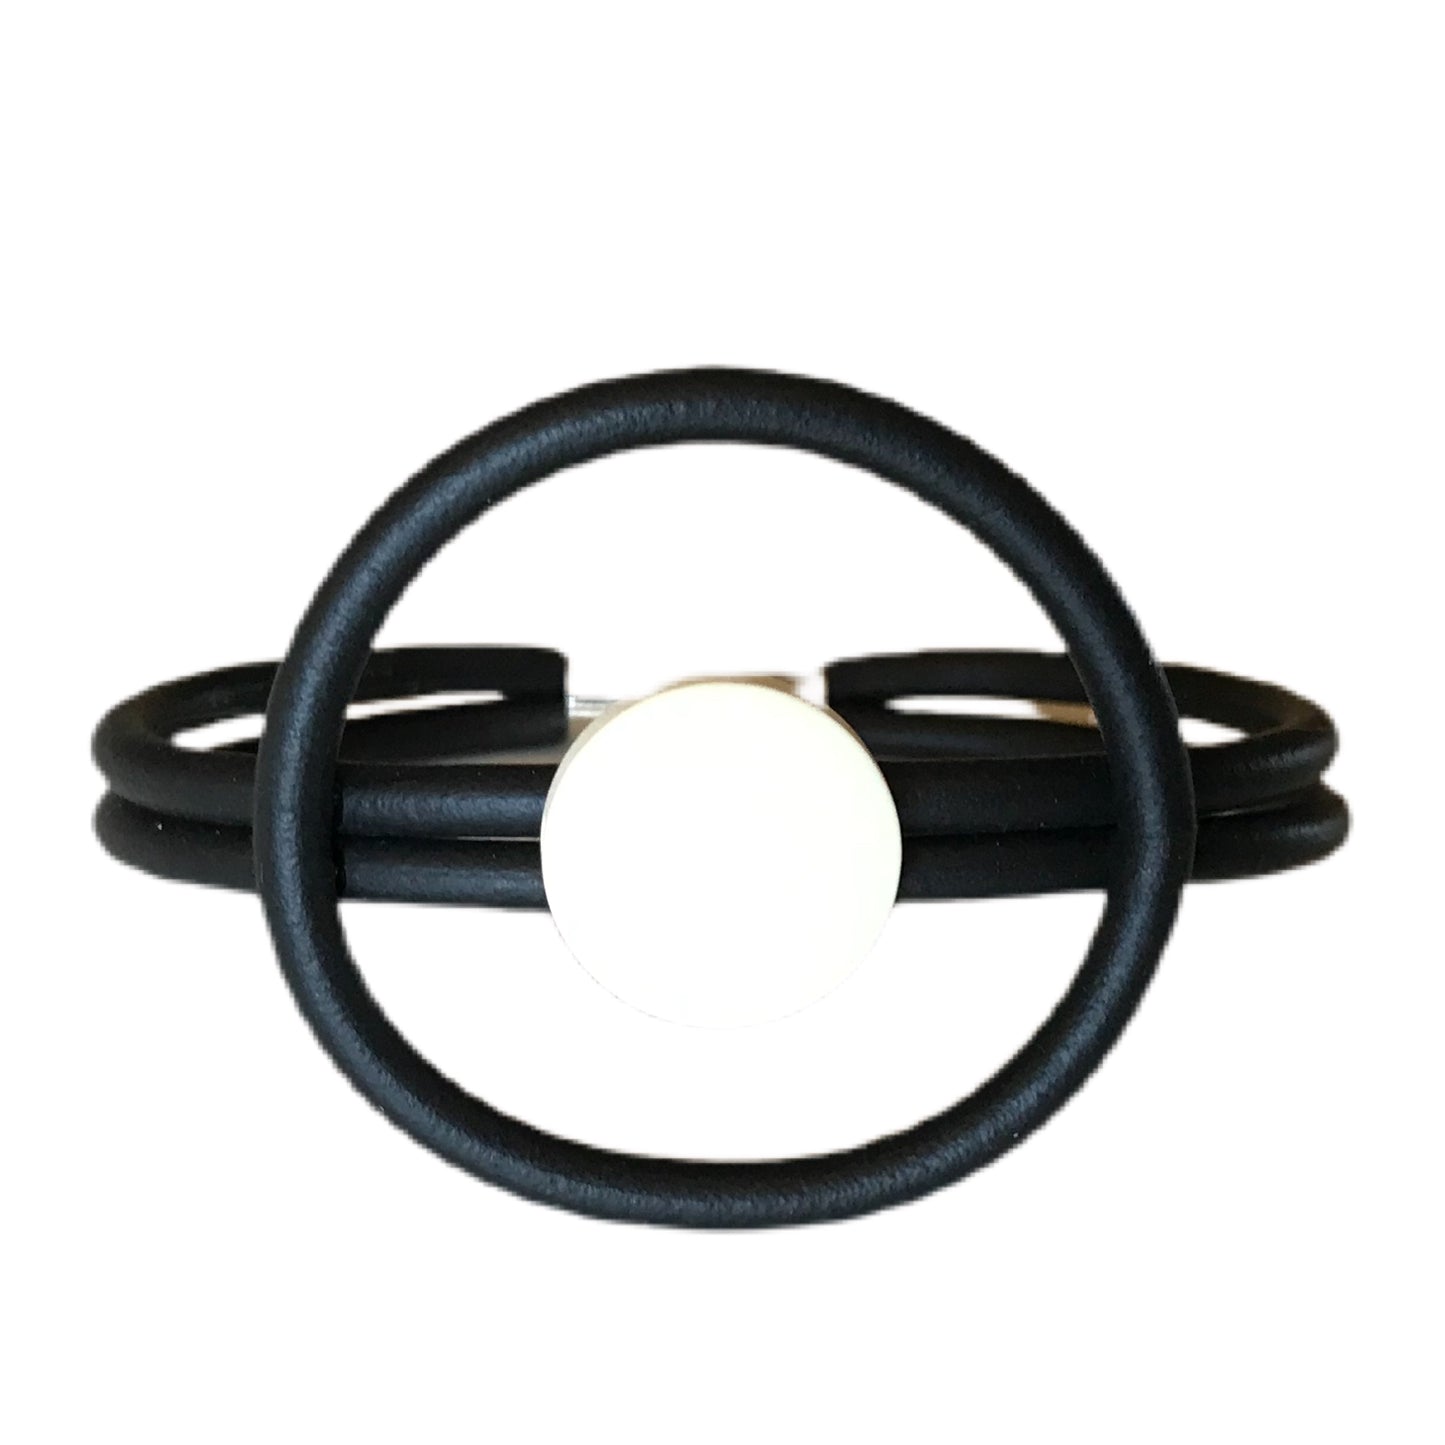 Op-Art Collection Foam Black Bracelet with White Dot Center